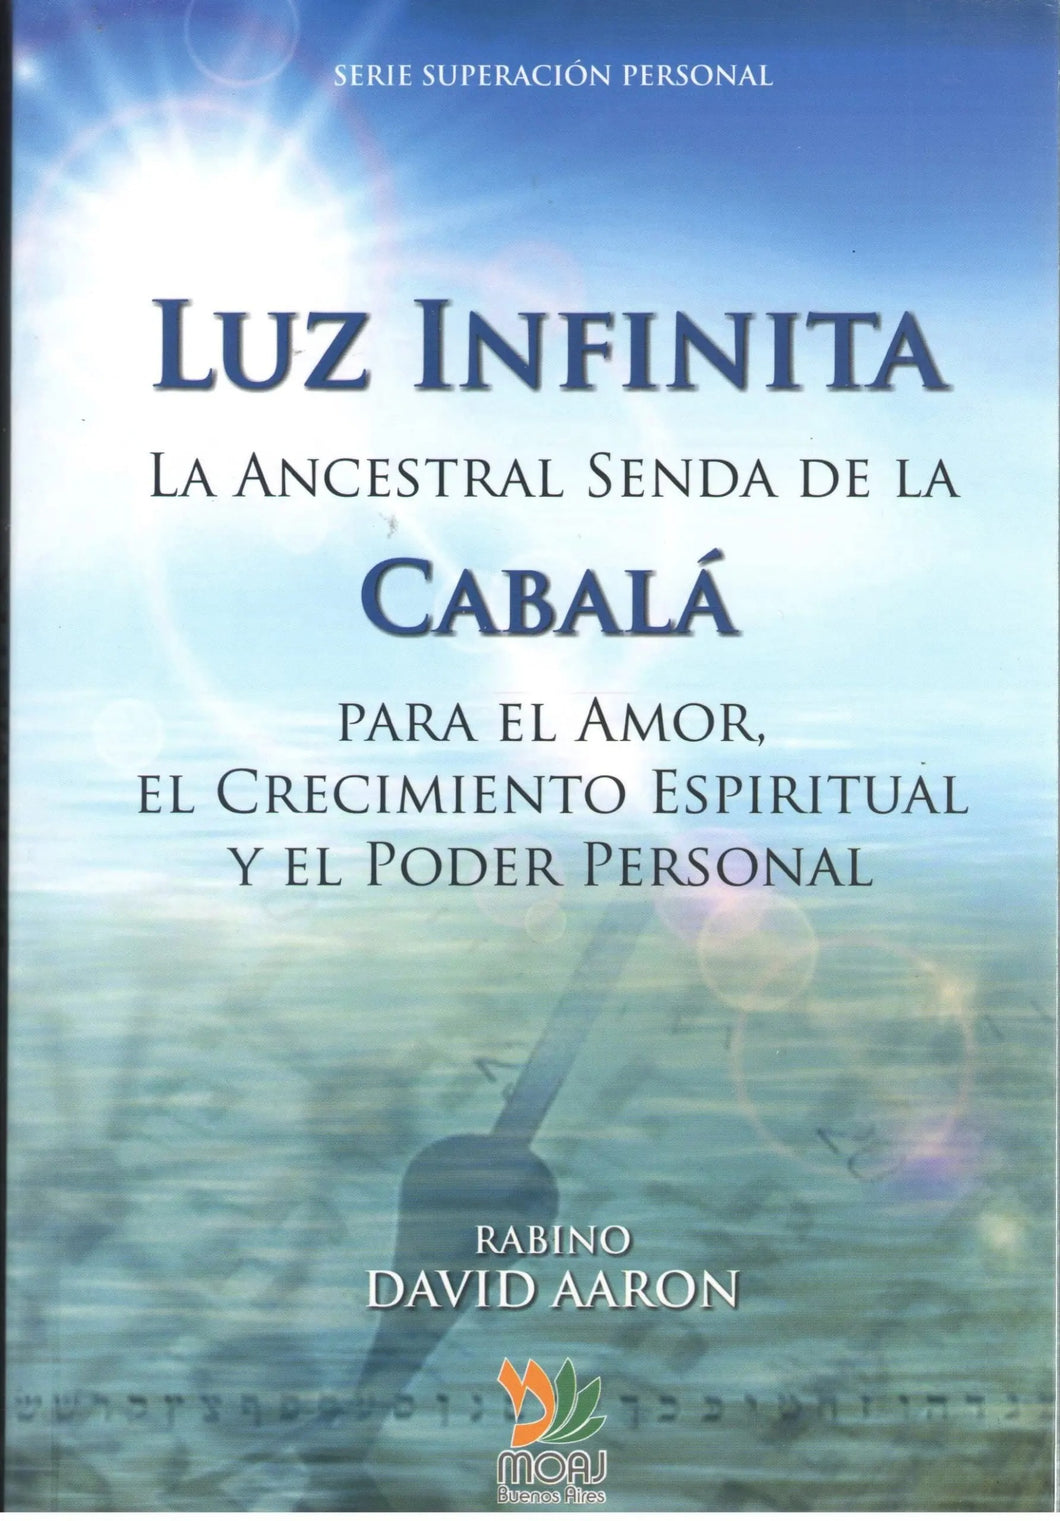 LUZ INFINITA-ANCESTRAL SENDA DE LA CABALA